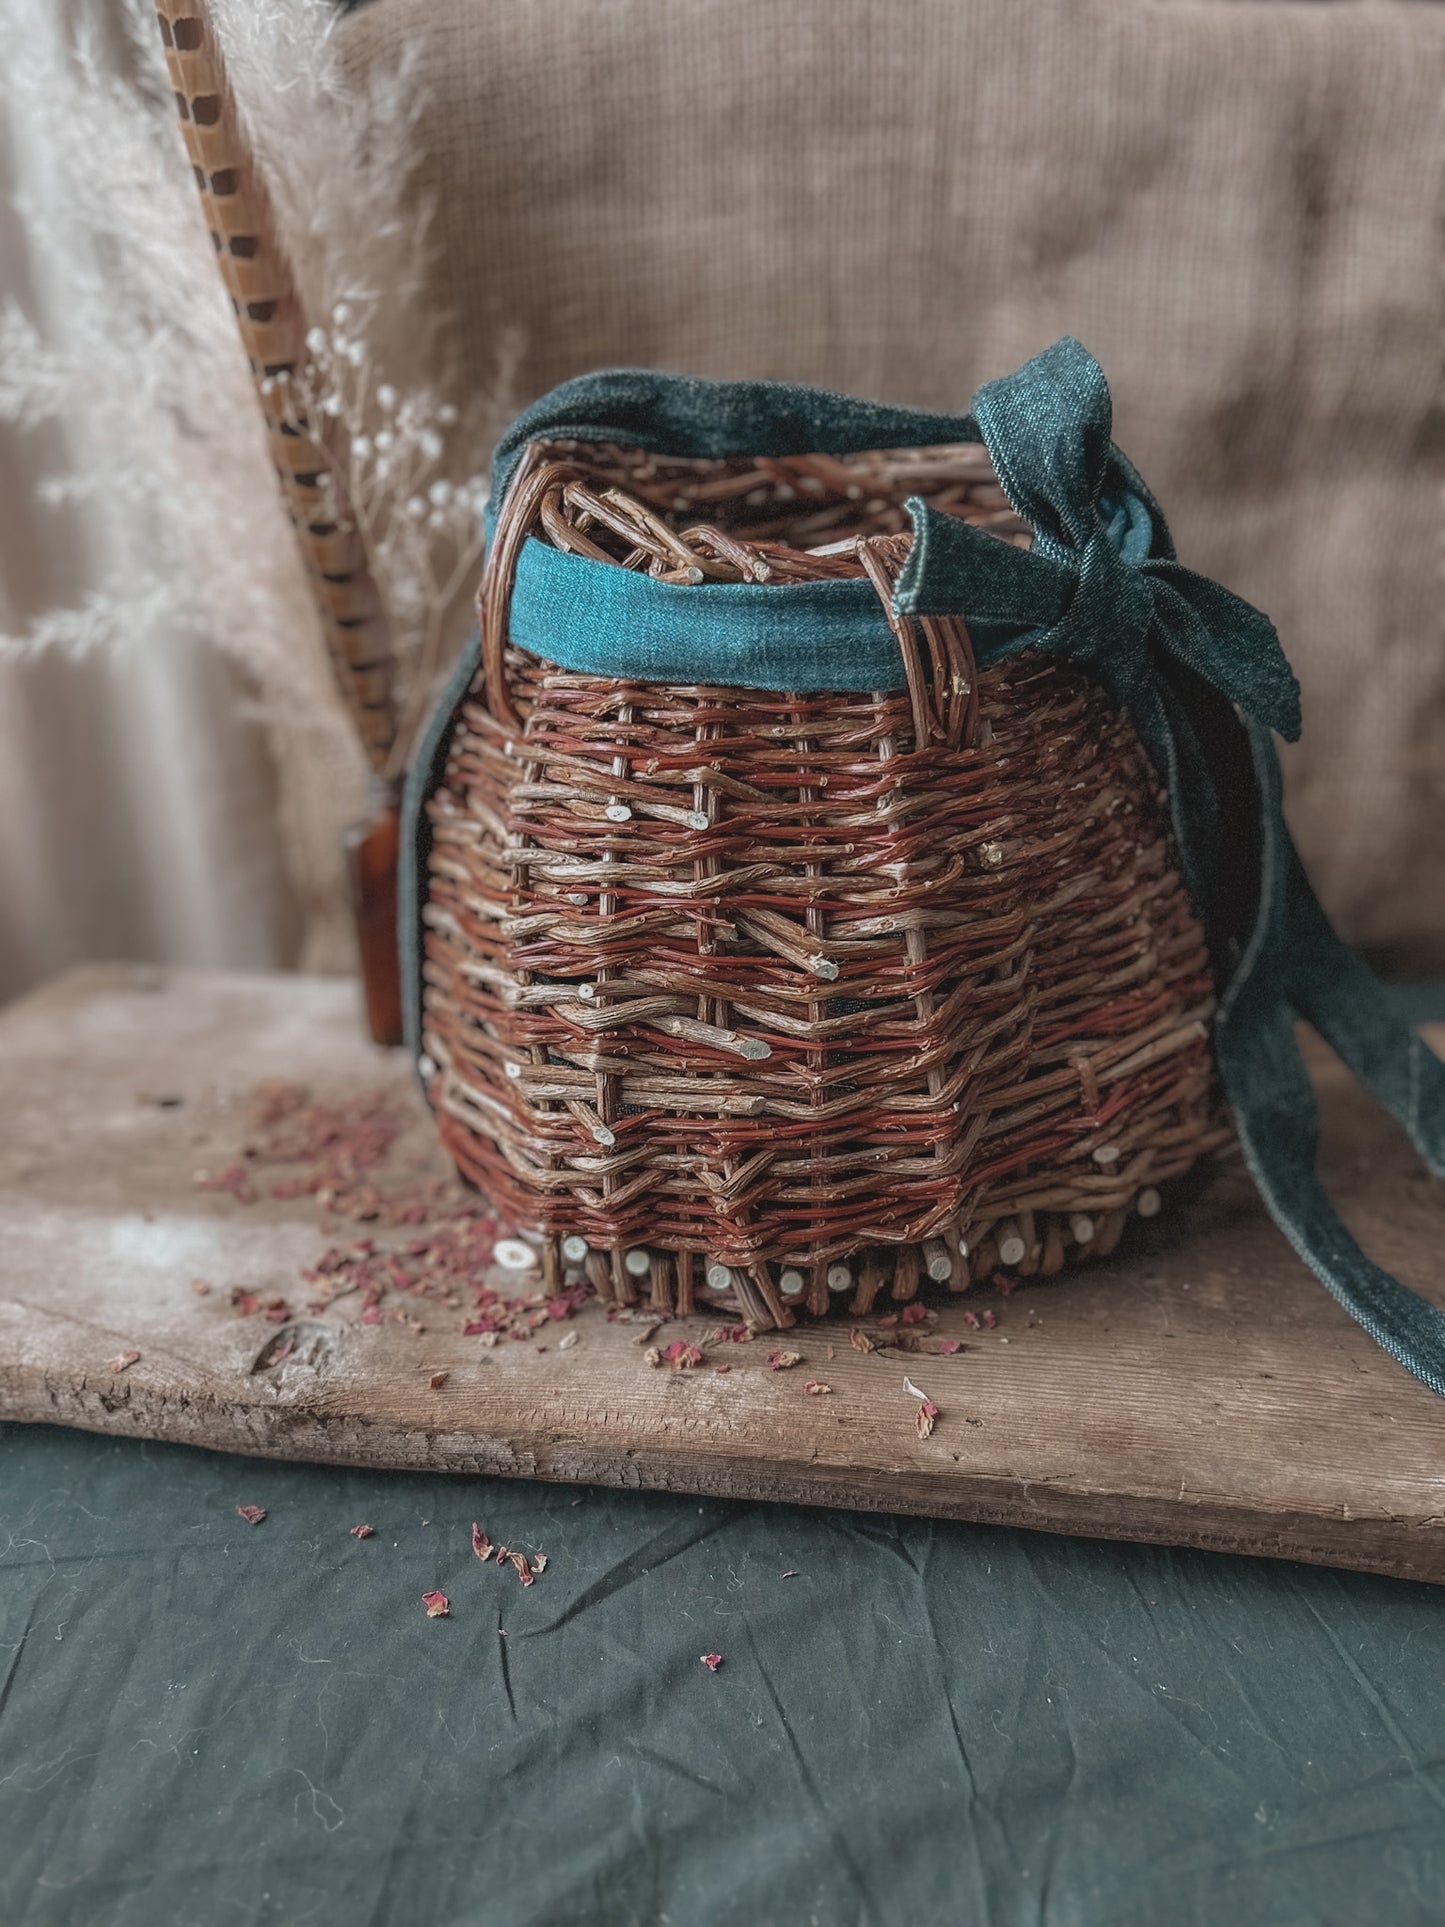 Willow Basket Weaving Workshop – The Wild Stuff